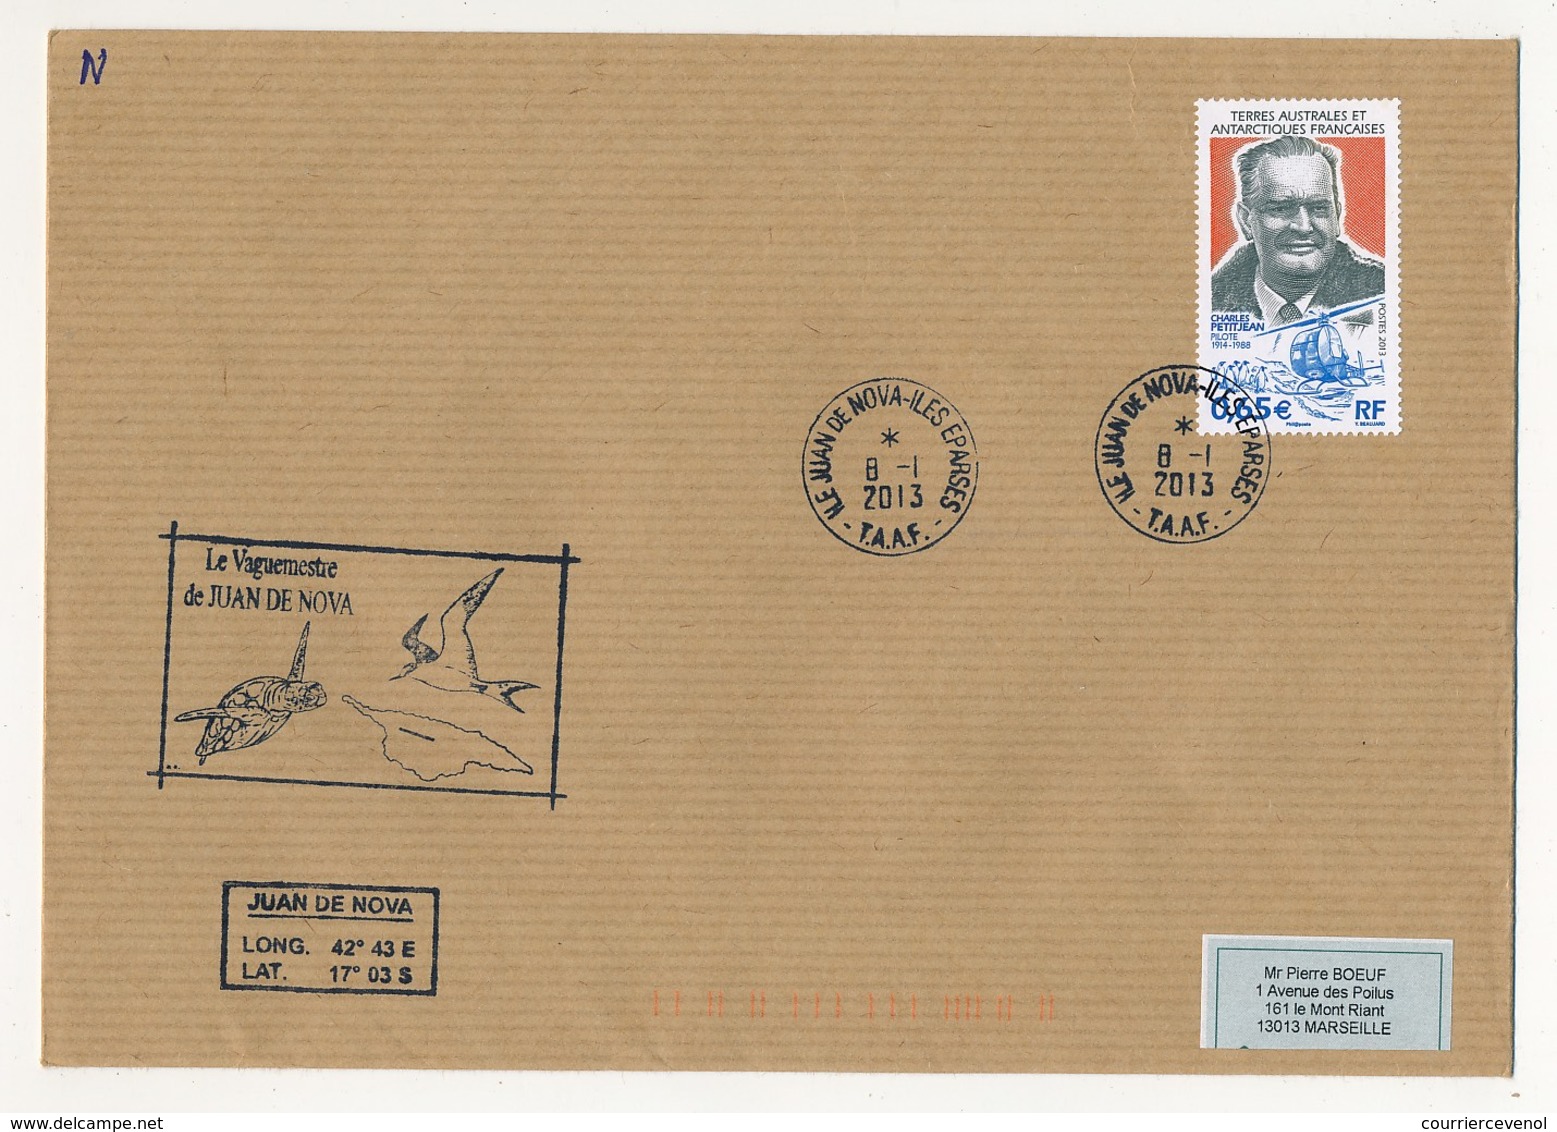 TAAF - Enveloppe Affr. 0,65E Charles Petitjean - Ile Juan De Nova - Iles Eparses 8-1-2013 + Cachet Vaguemestre - Storia Postale